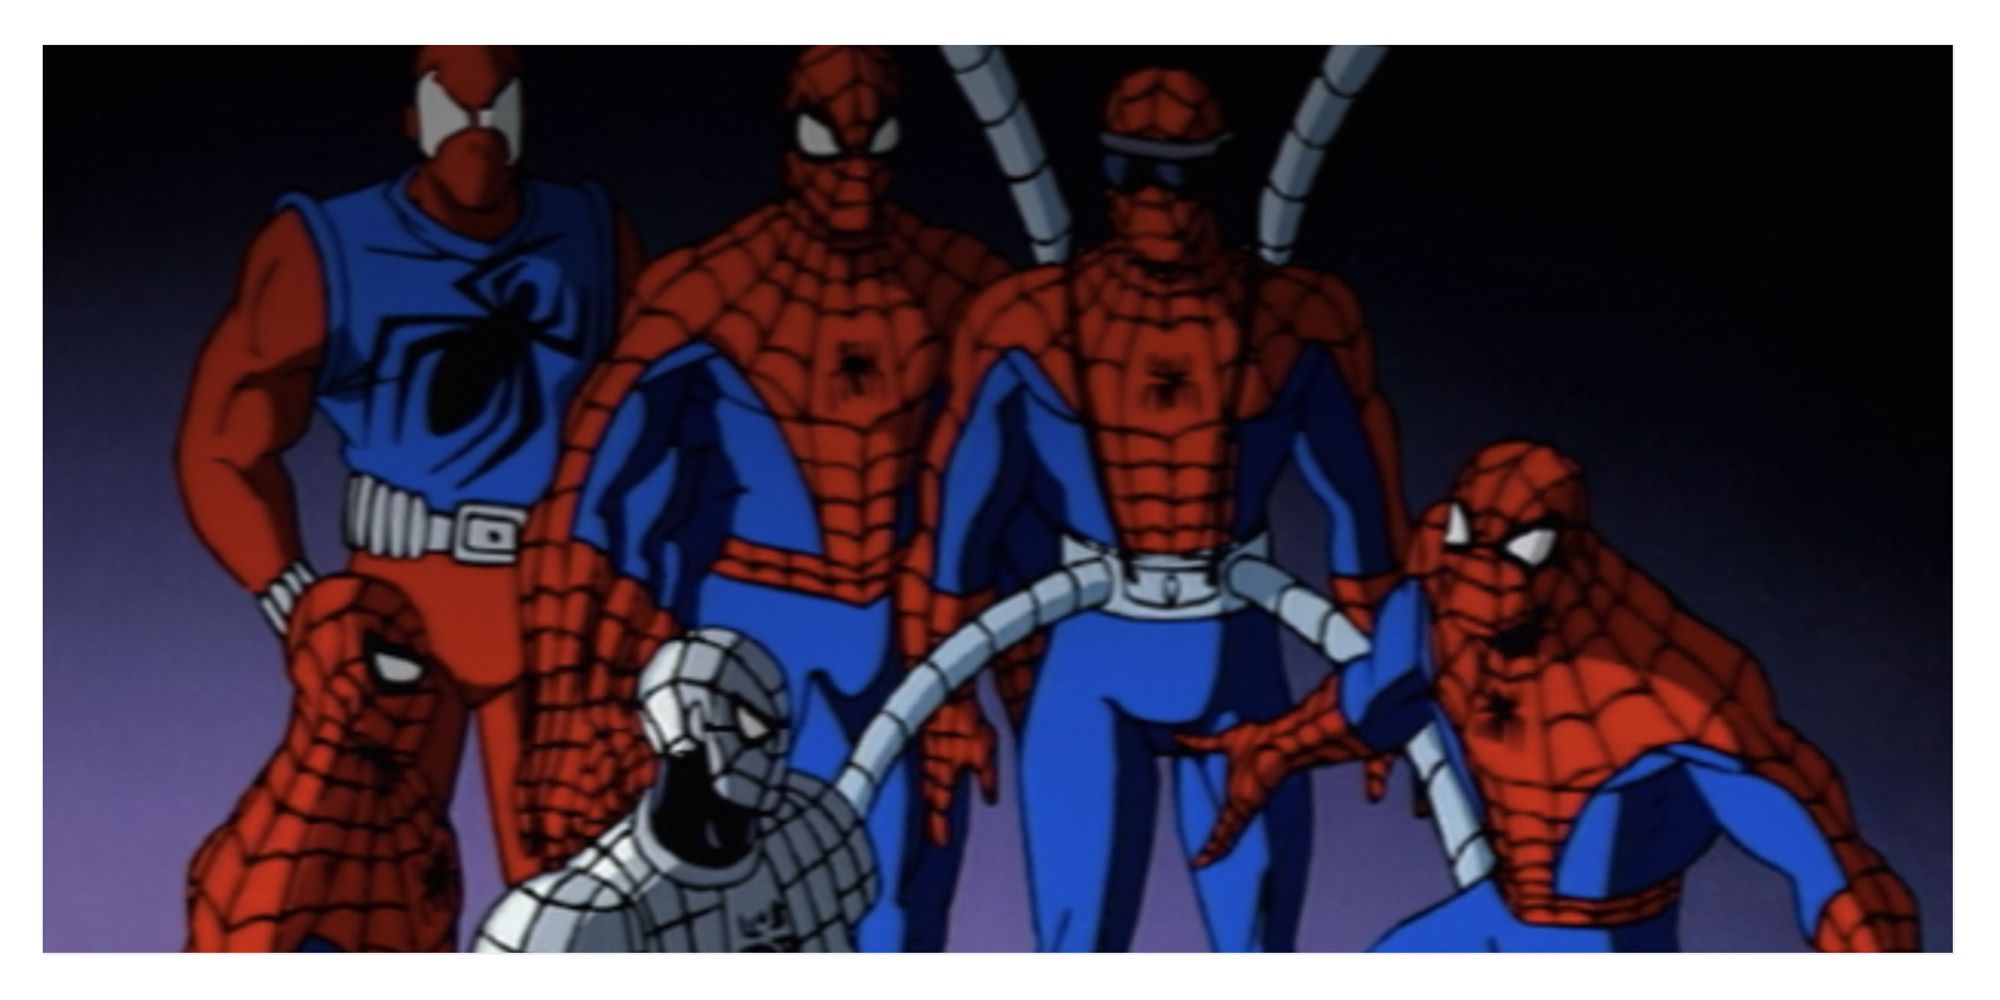 SpiderMen meeting together